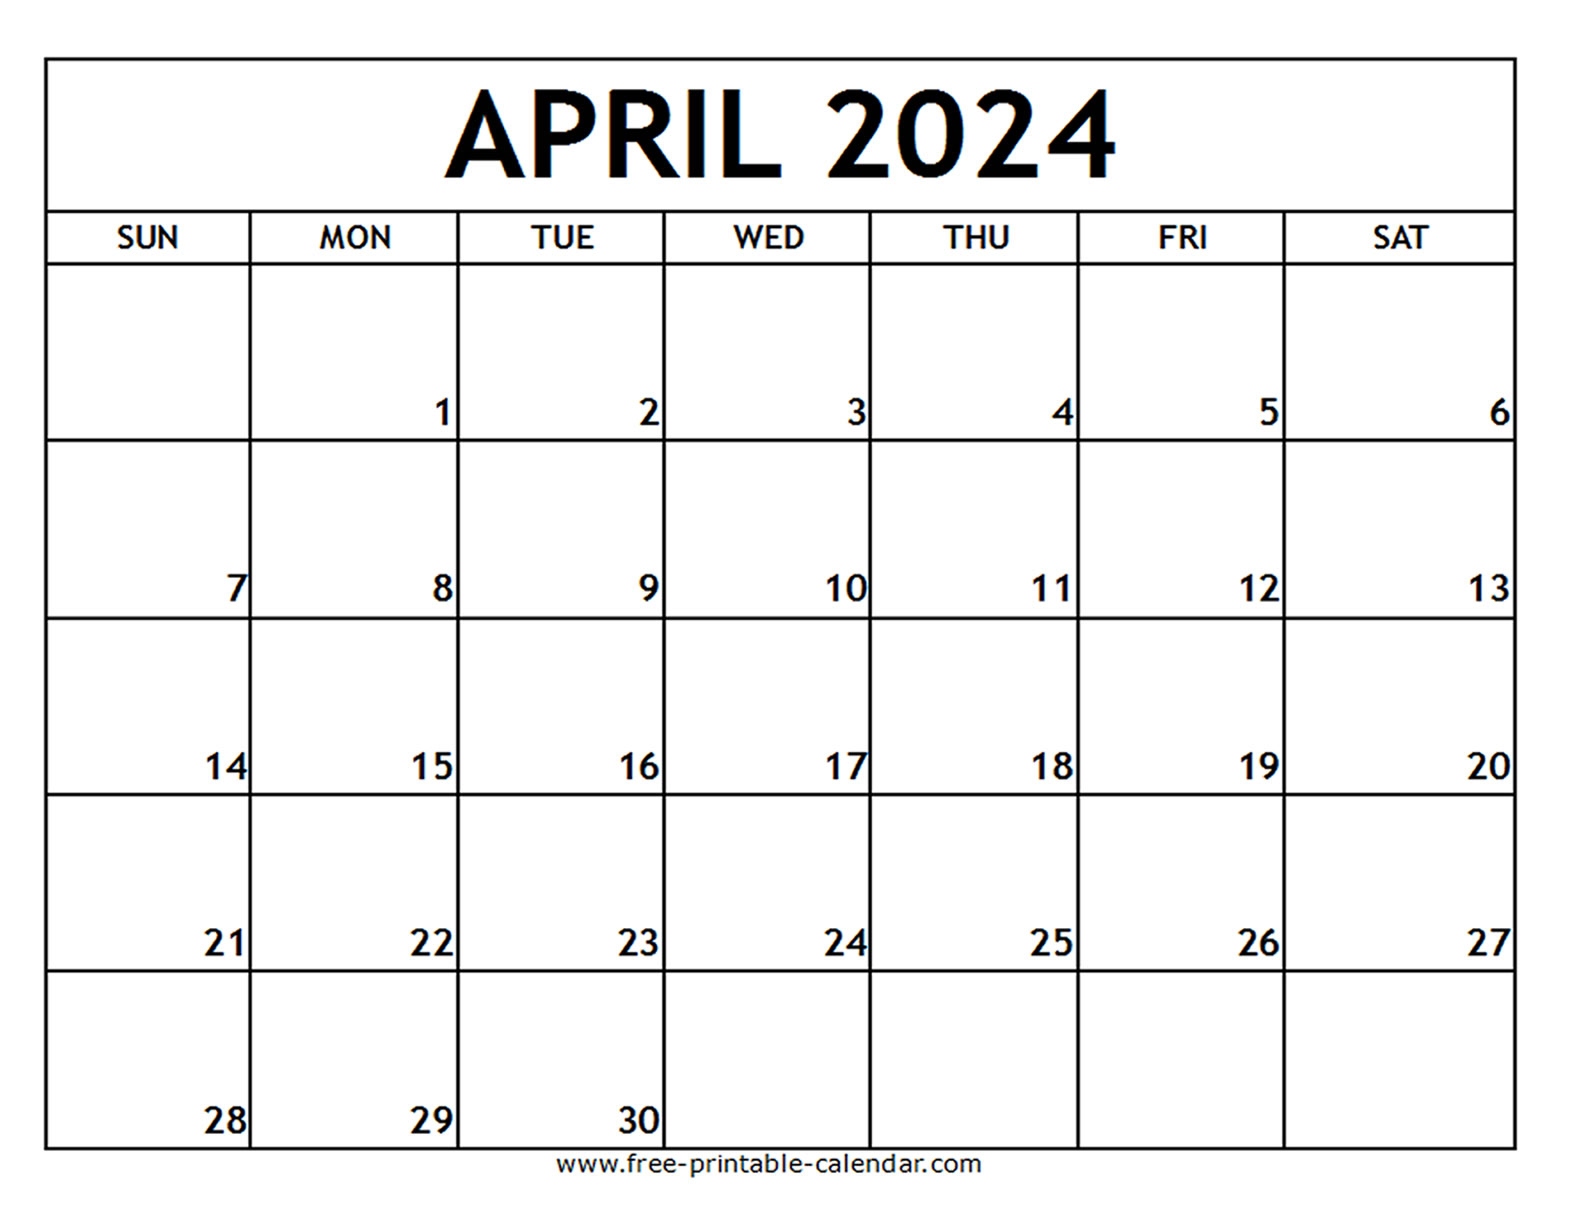 April 2024 Printable Calendar - Free-Printable-Calendar intended for Free Printable April 2024 Calendar